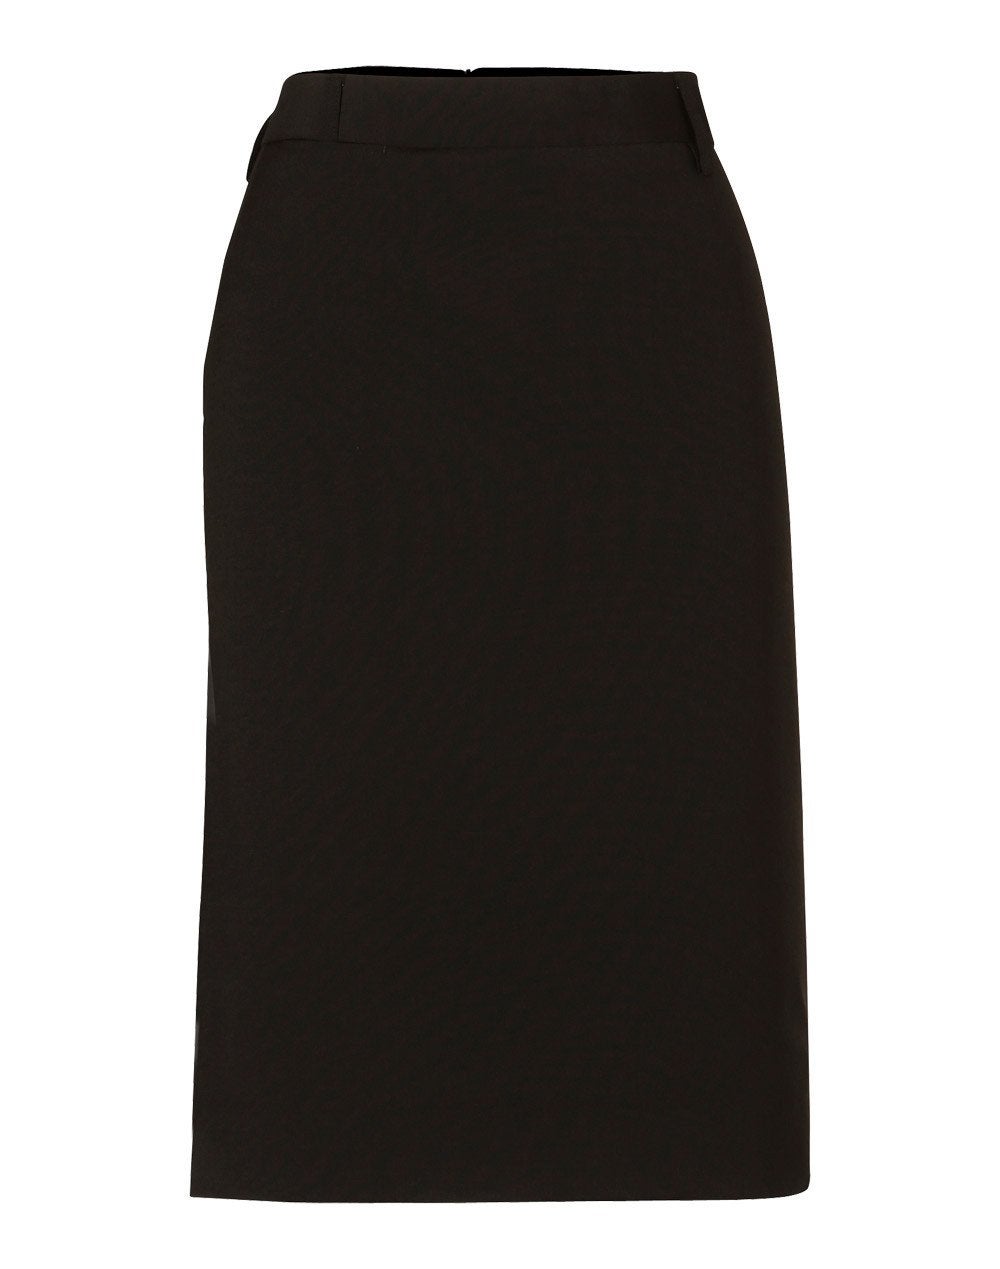 Wool Blend Mid Length Pencil Skirt